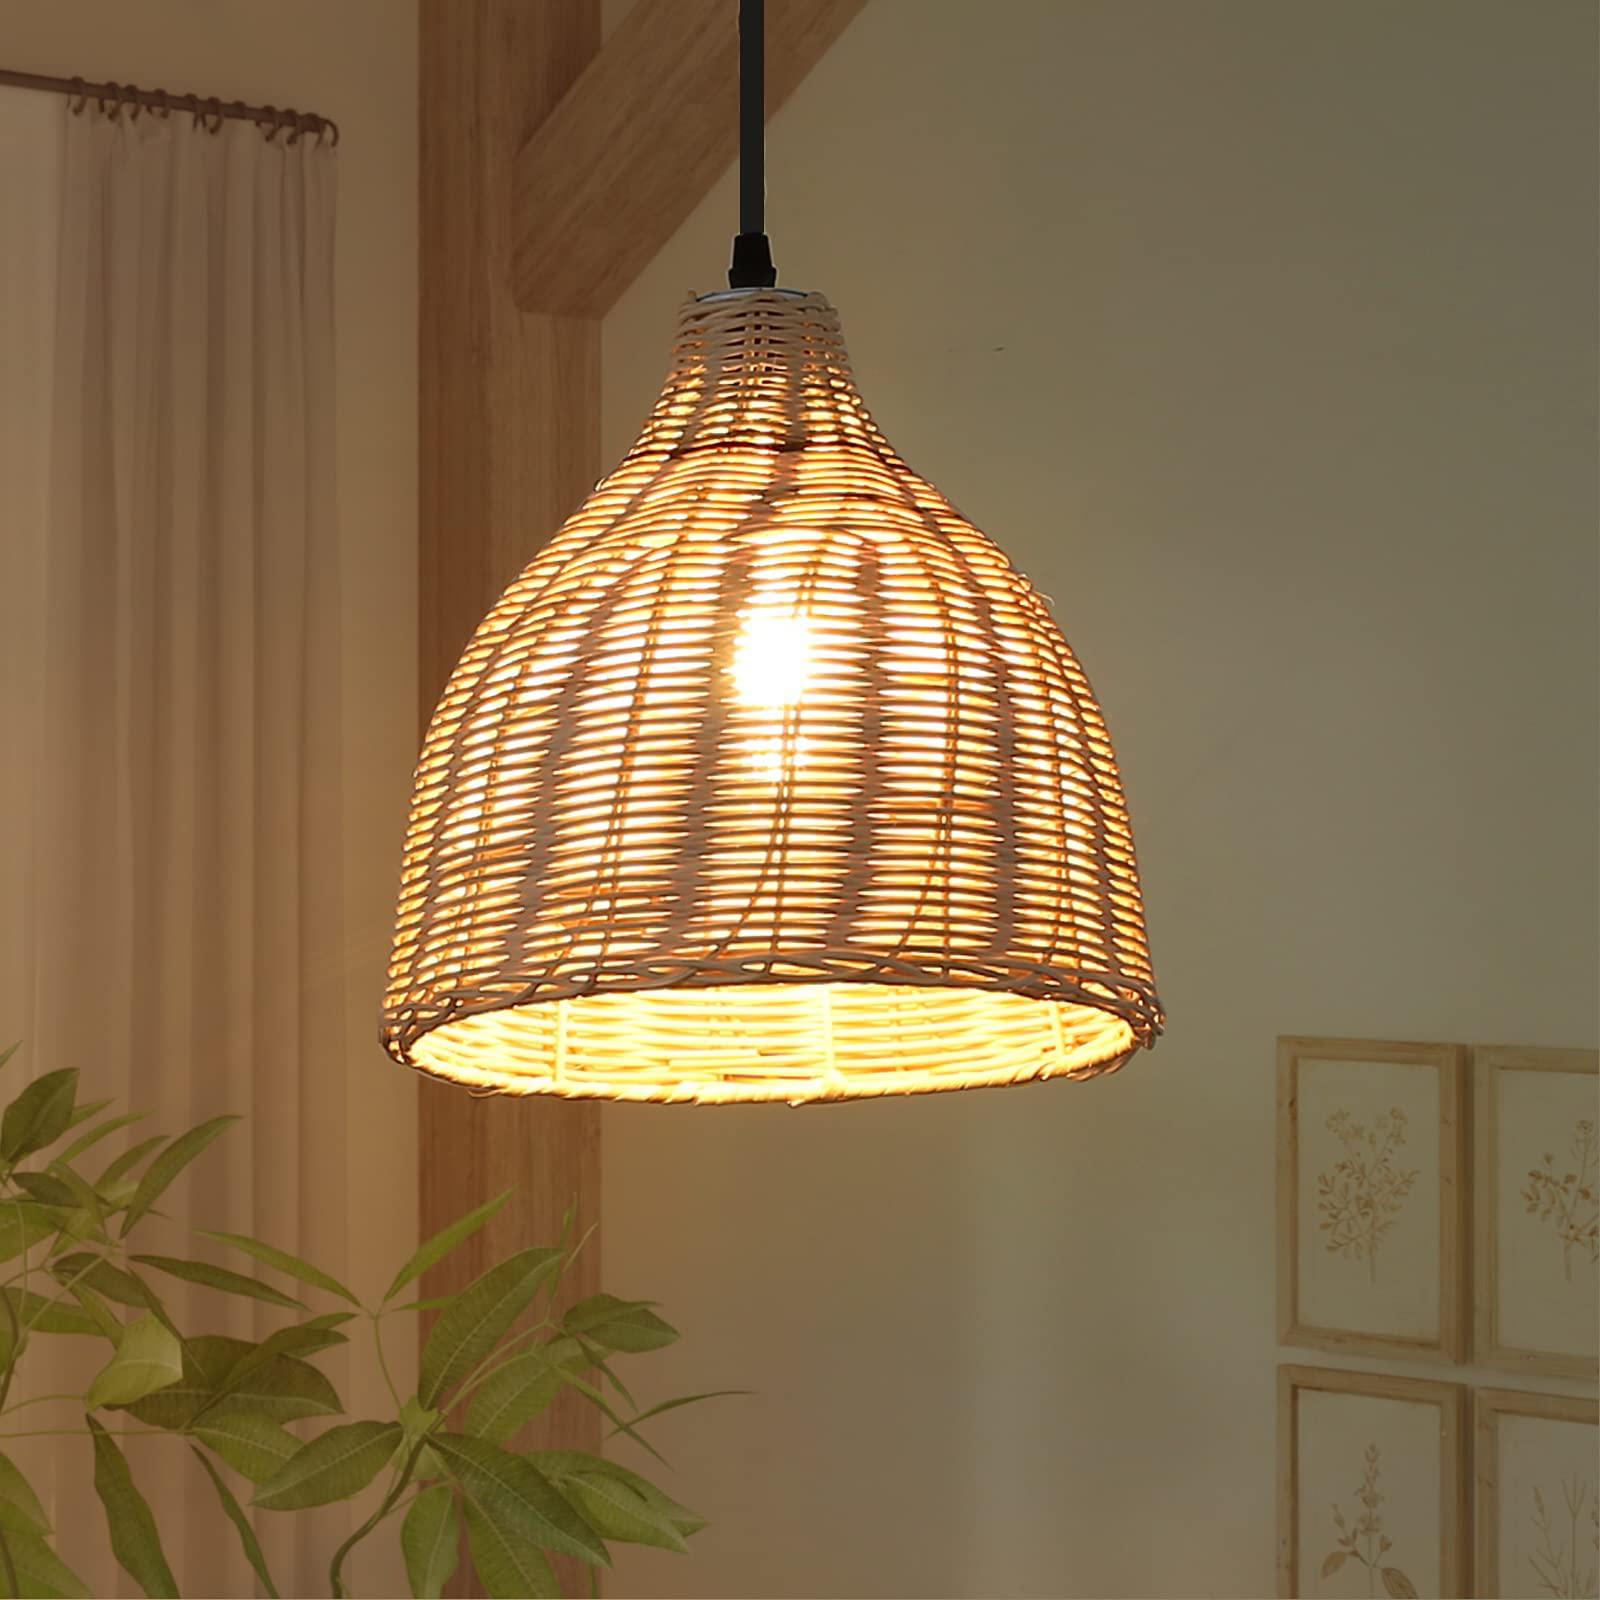 LUSTORM 1 plug in cord vintage pendant lighting bamboo bedroom hanging lamp fixture ceiling industrial chandelier lights with 11.5ft co